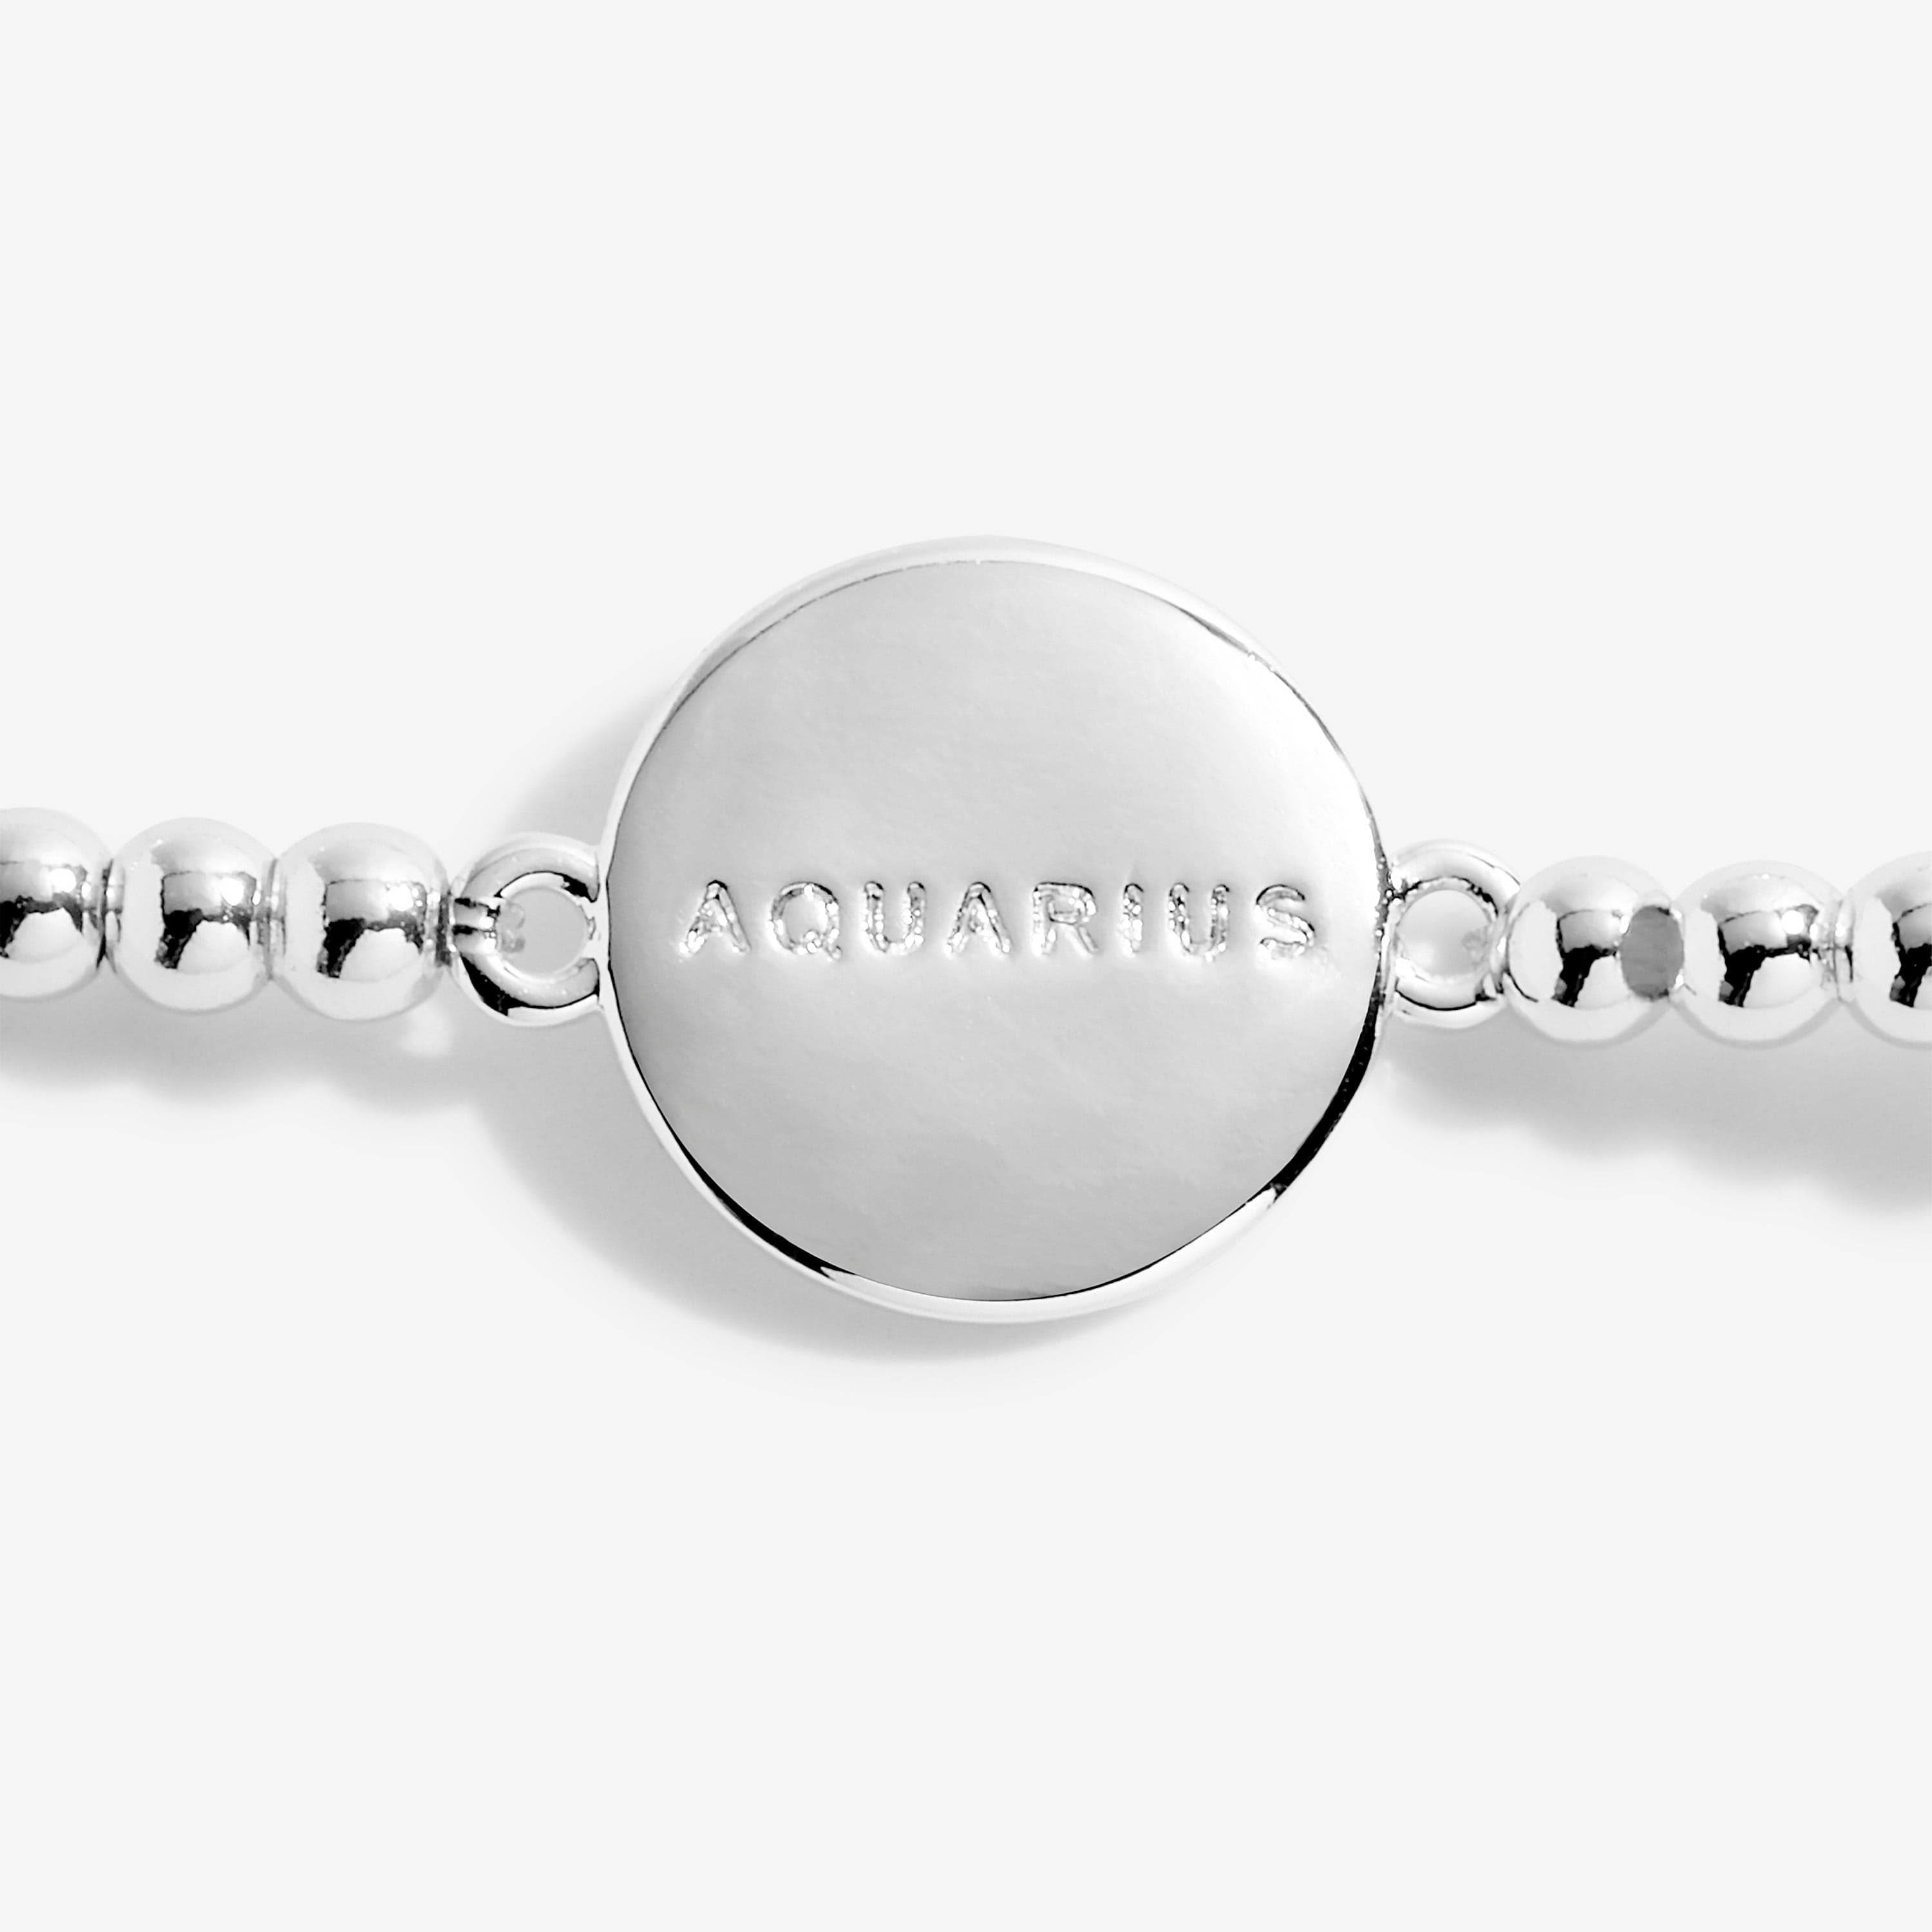 Joma Jewellery Bracelet Joma Jewellery Star Sign Bracelet - Aquarius